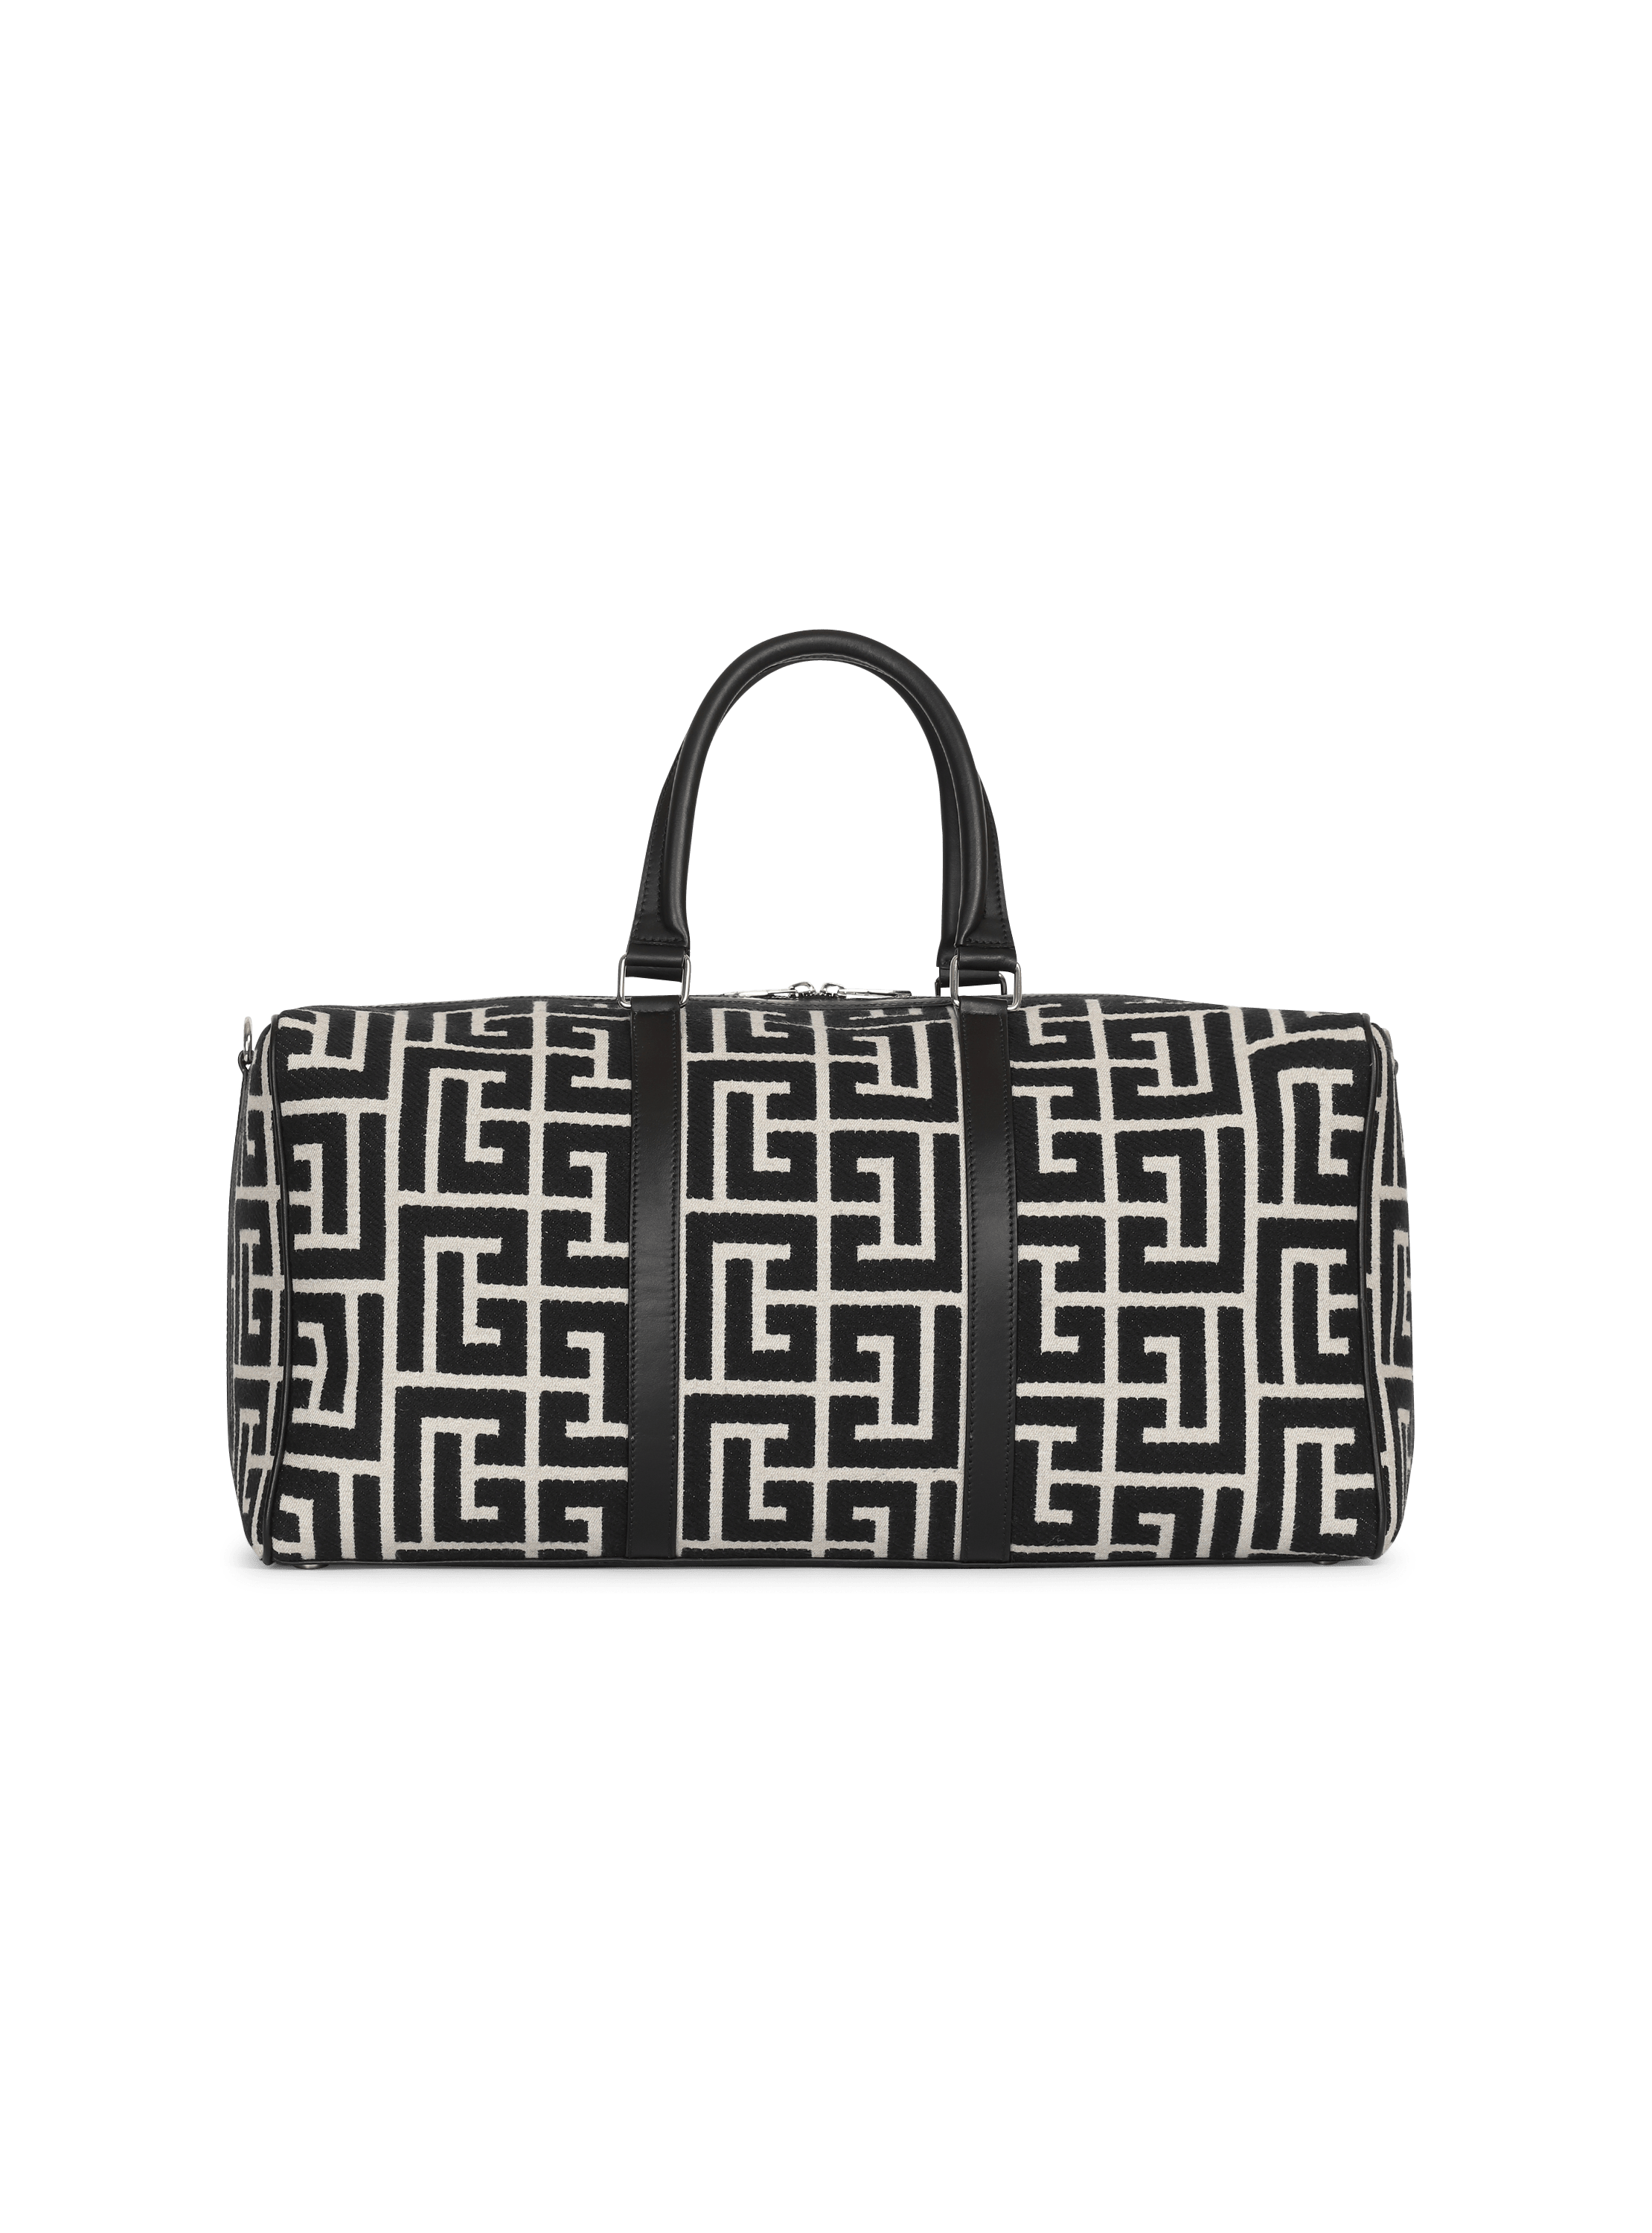 Travel bag with jacquard maxi monogram